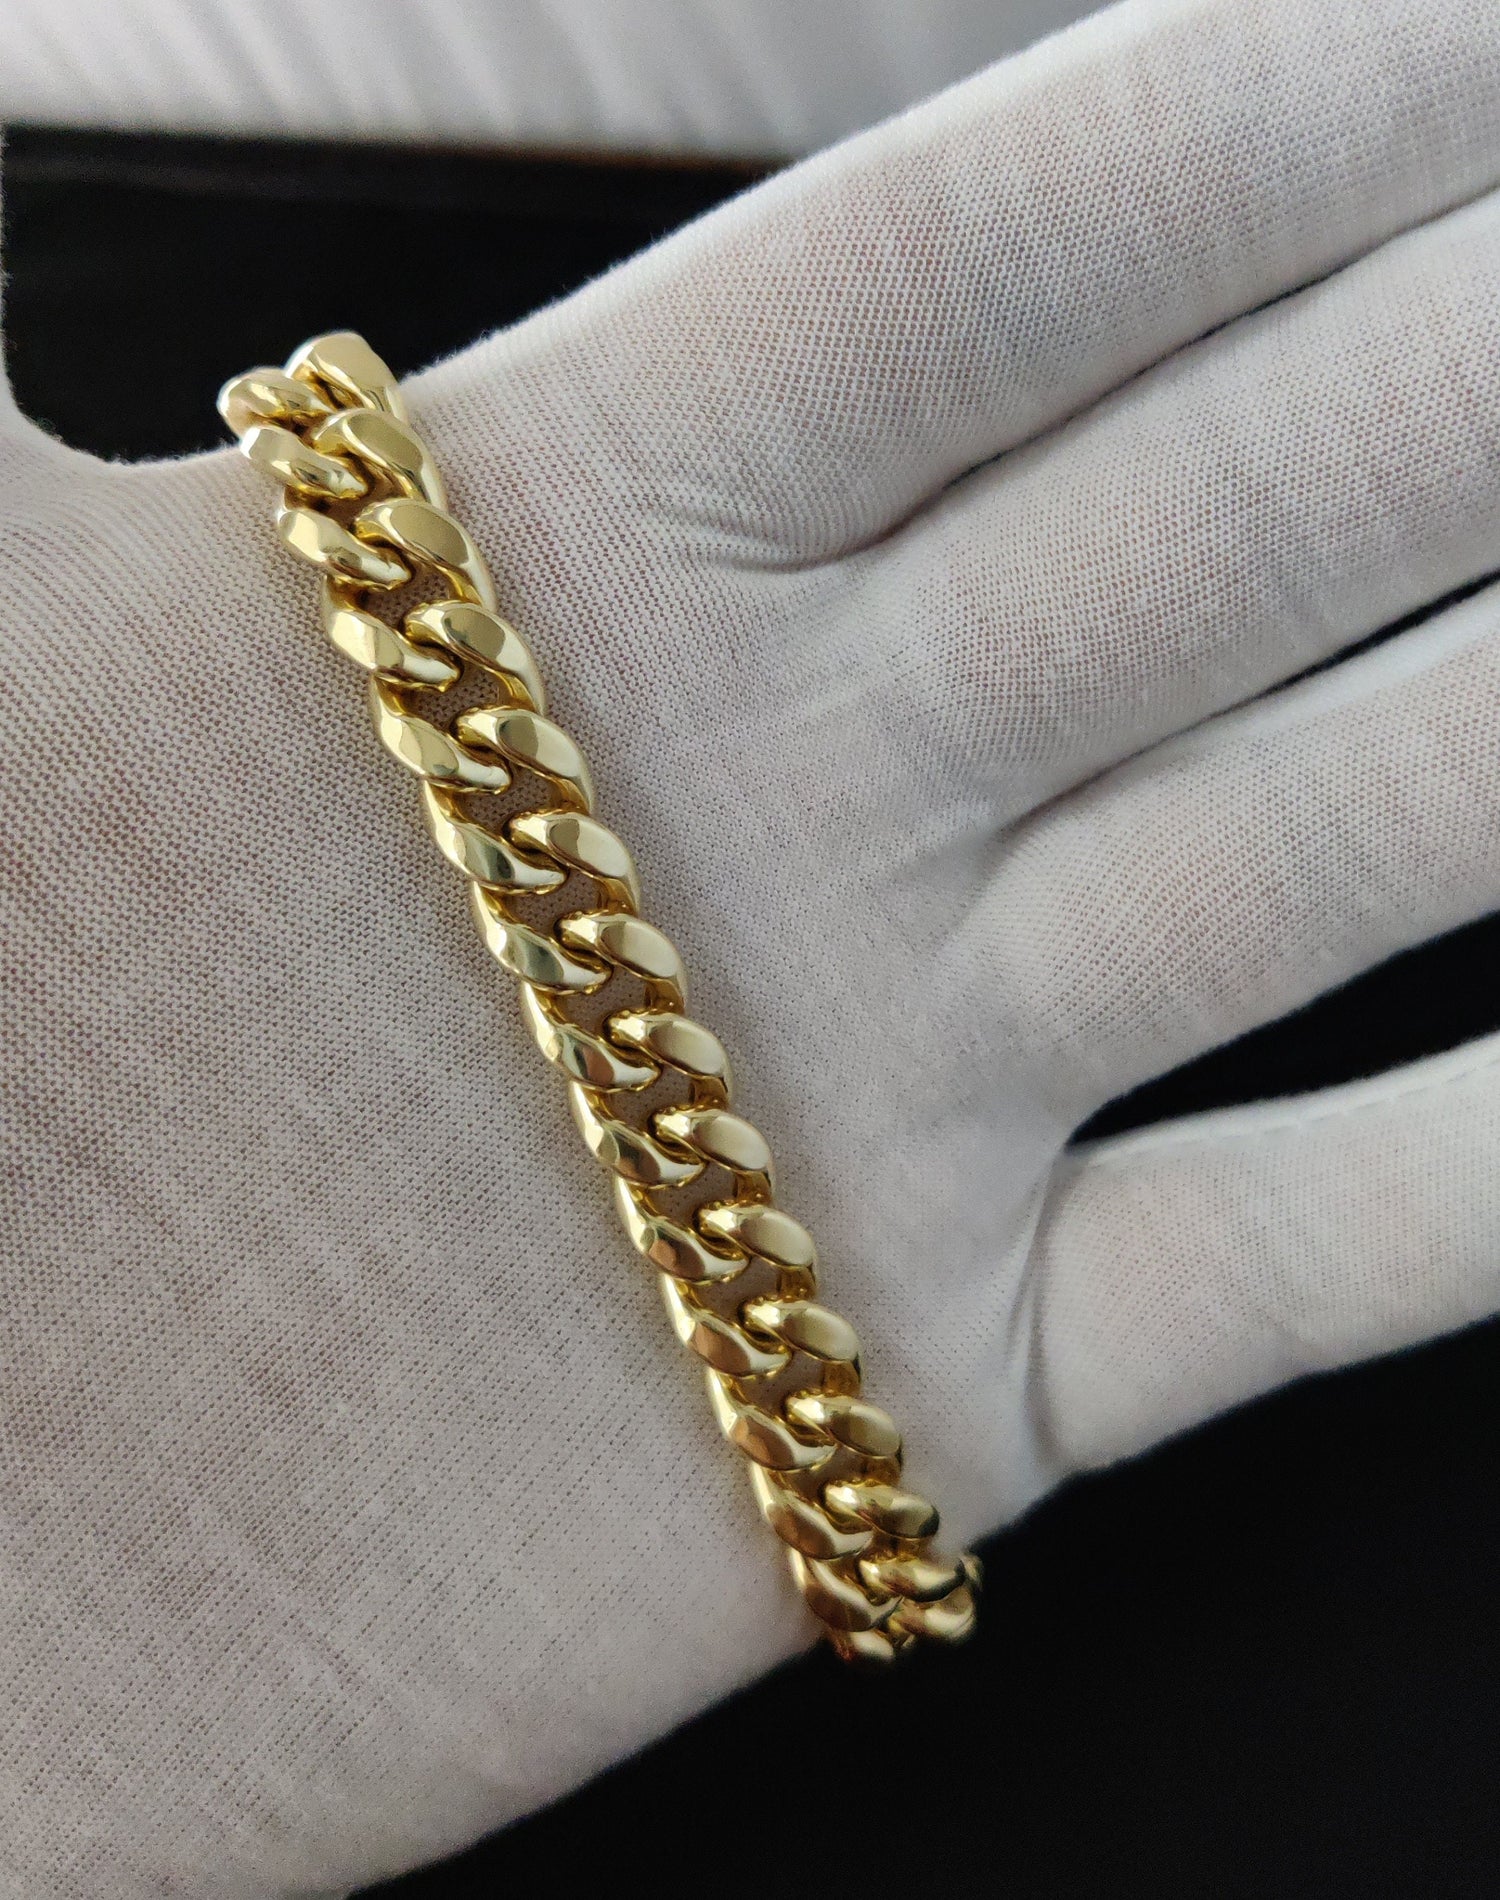 Amazon.com: Nuragold 10k Yellow Gold 7mm Solid Miami Cuban Link Chain  Bracelet, Mens Jewelry Box Clasp 7